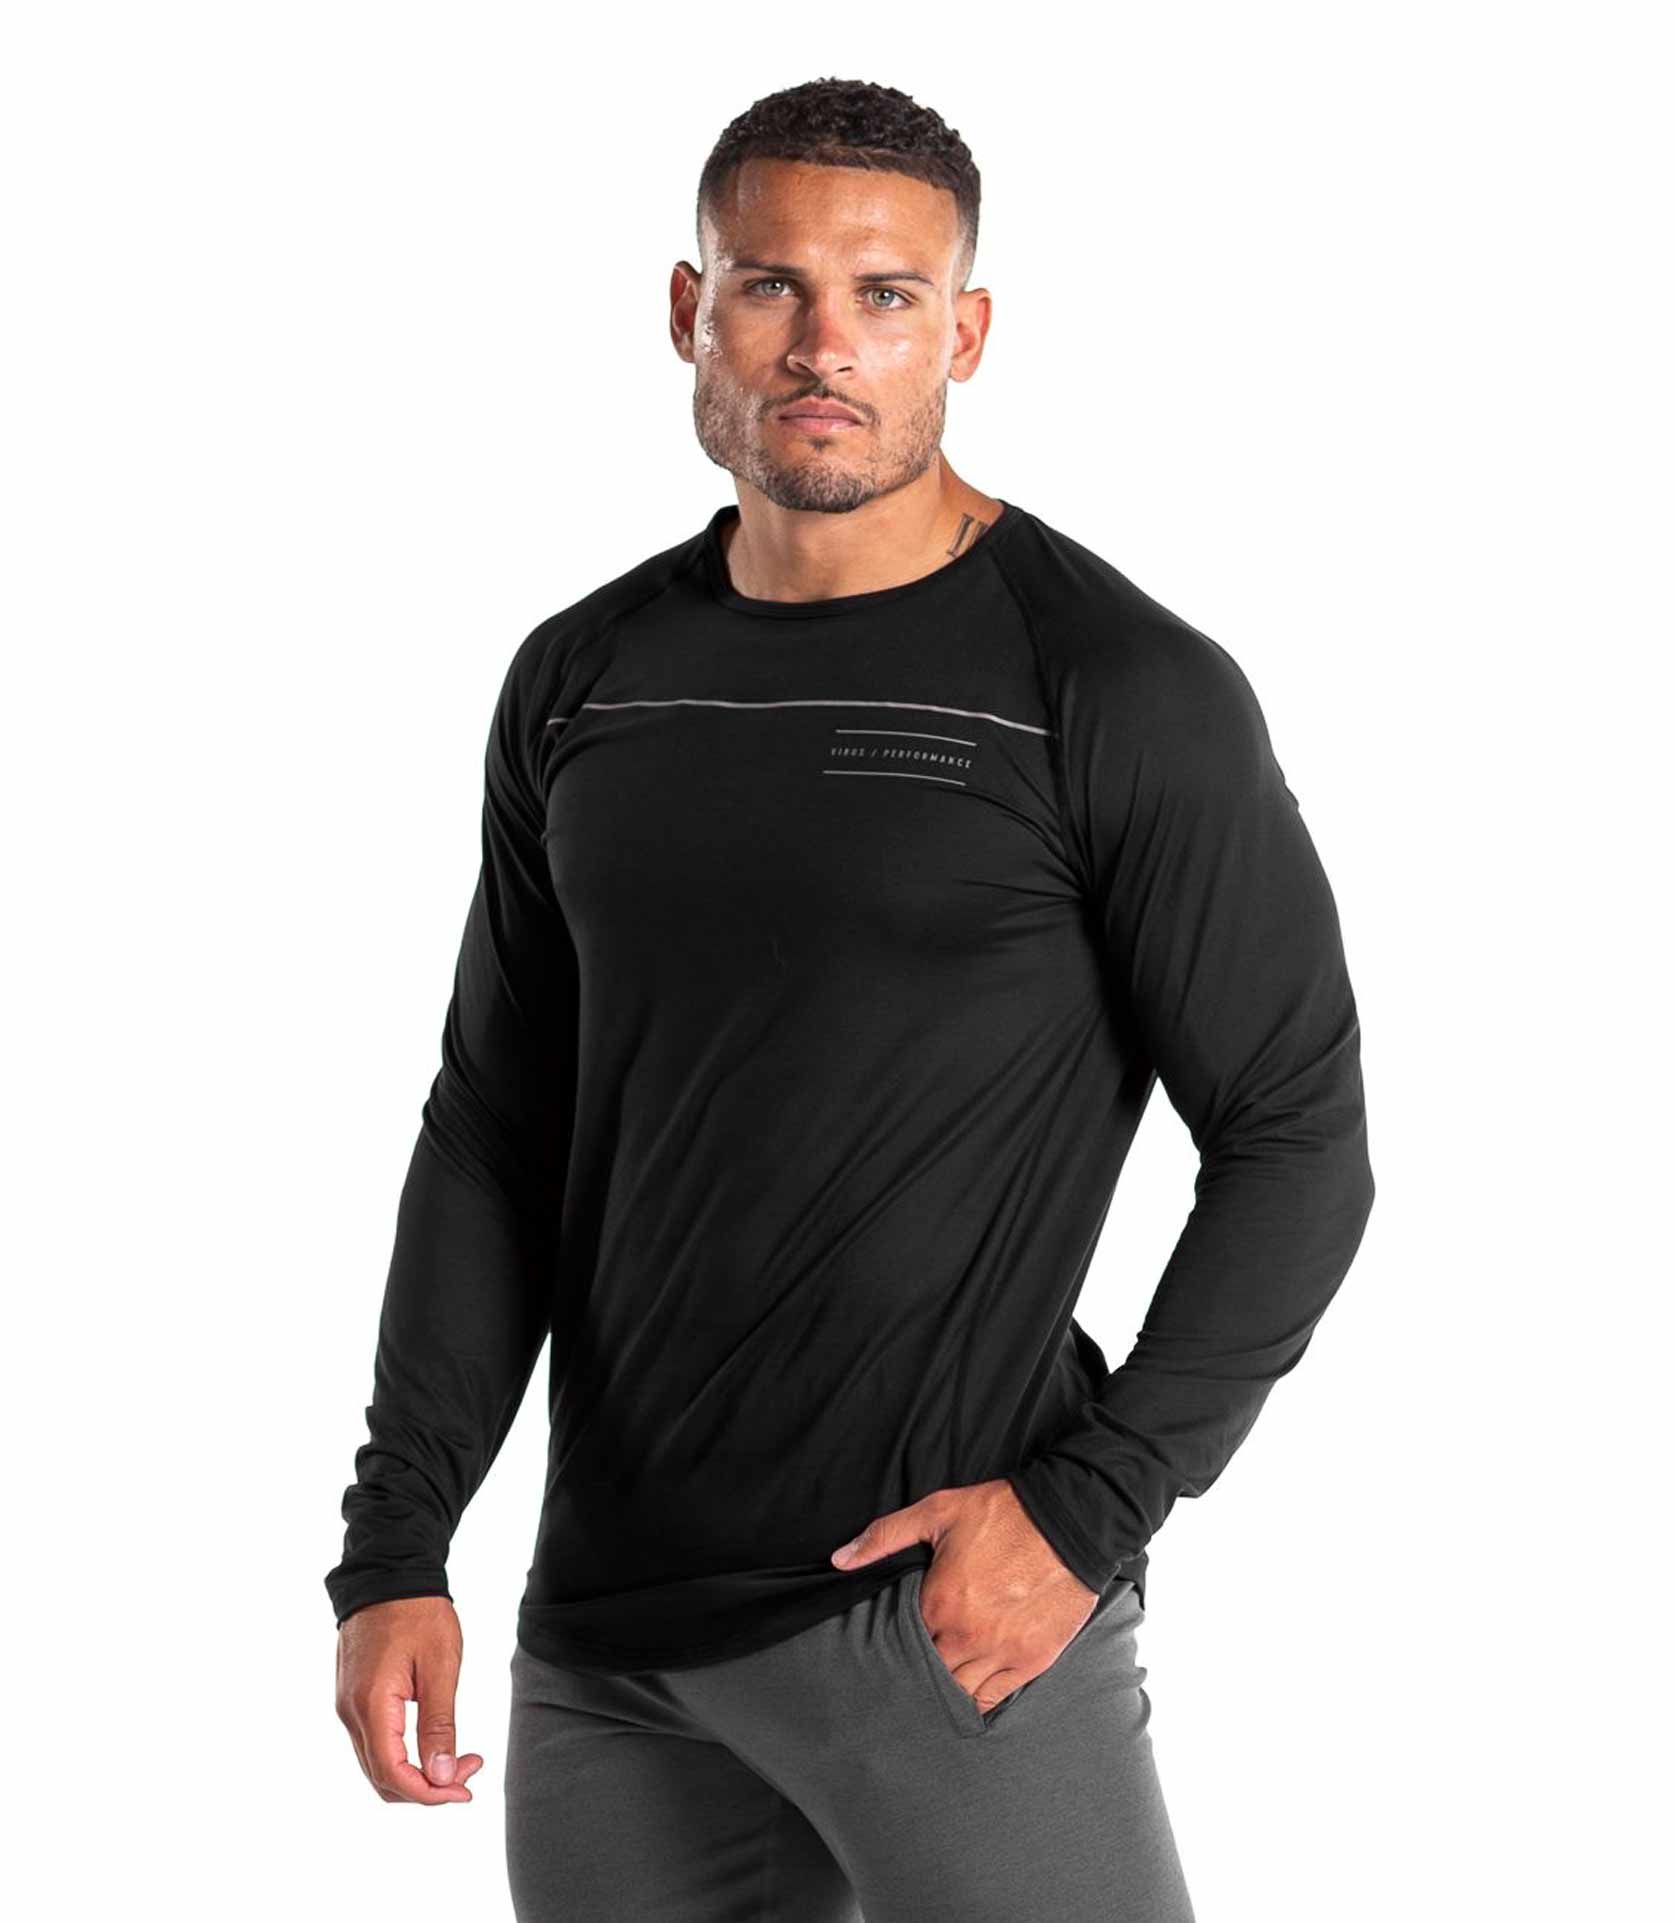 Virus Bioceramic Men Compression T-shirt Top Black L size Fitness